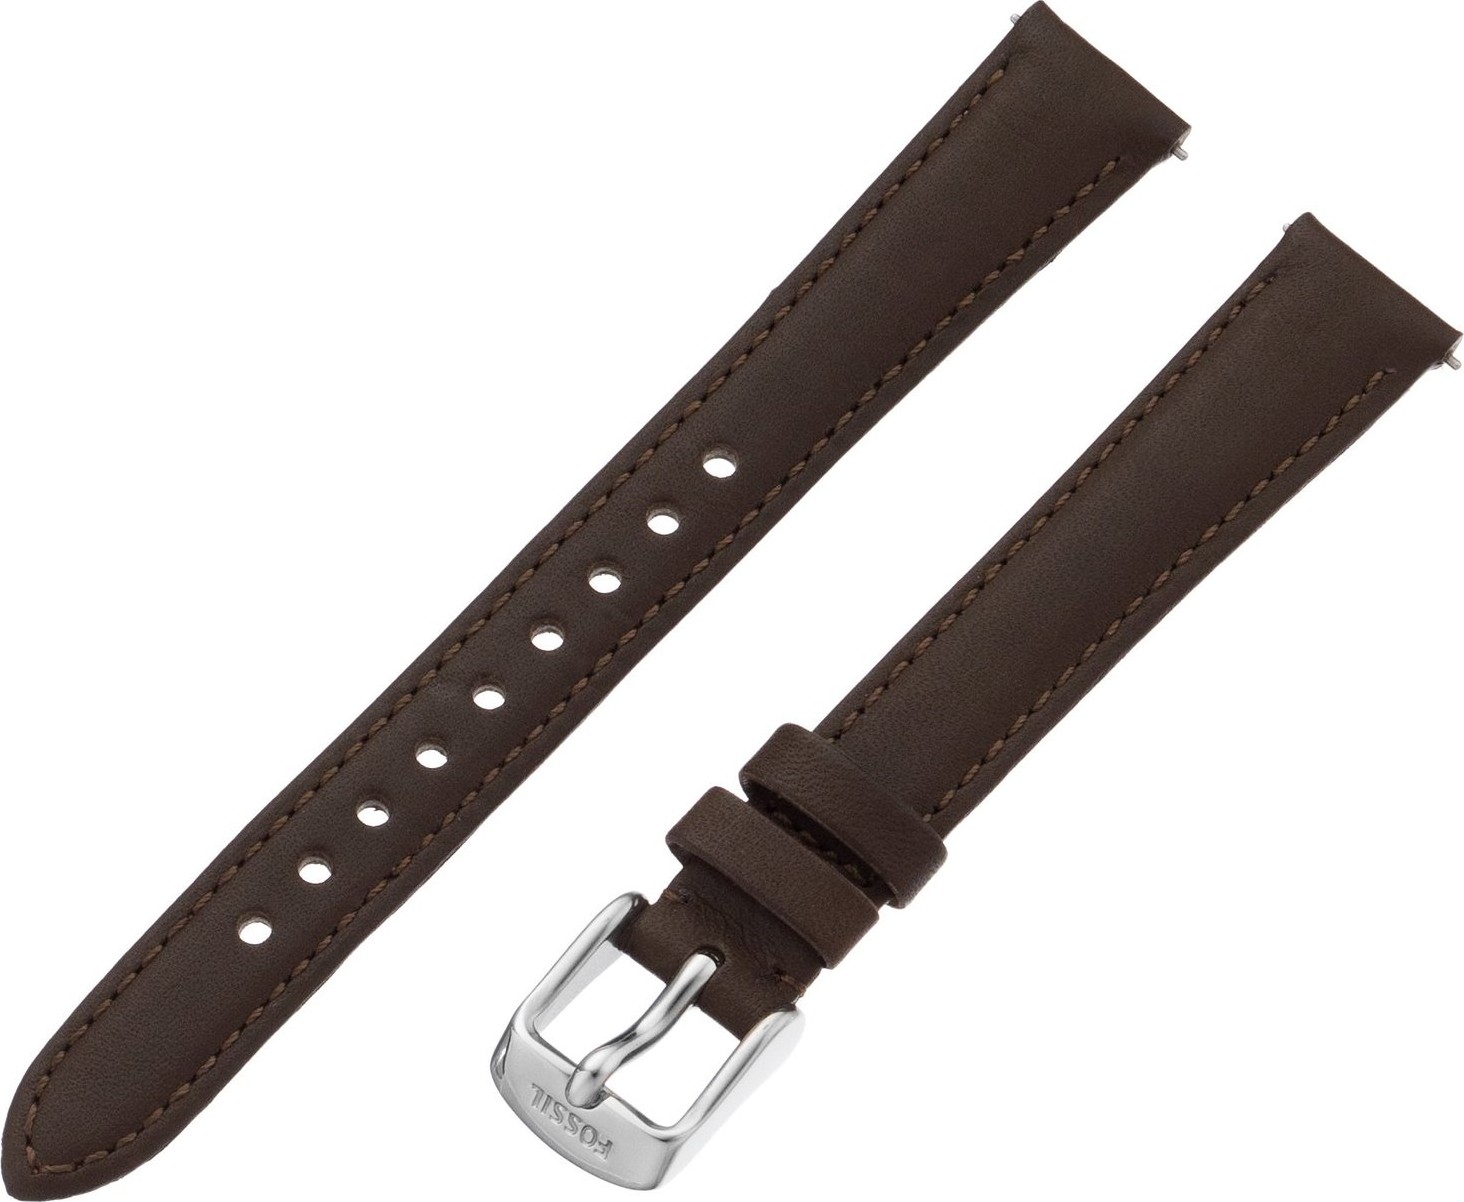 Fossil Women's Leather Watch Strap - Espresso 14mm